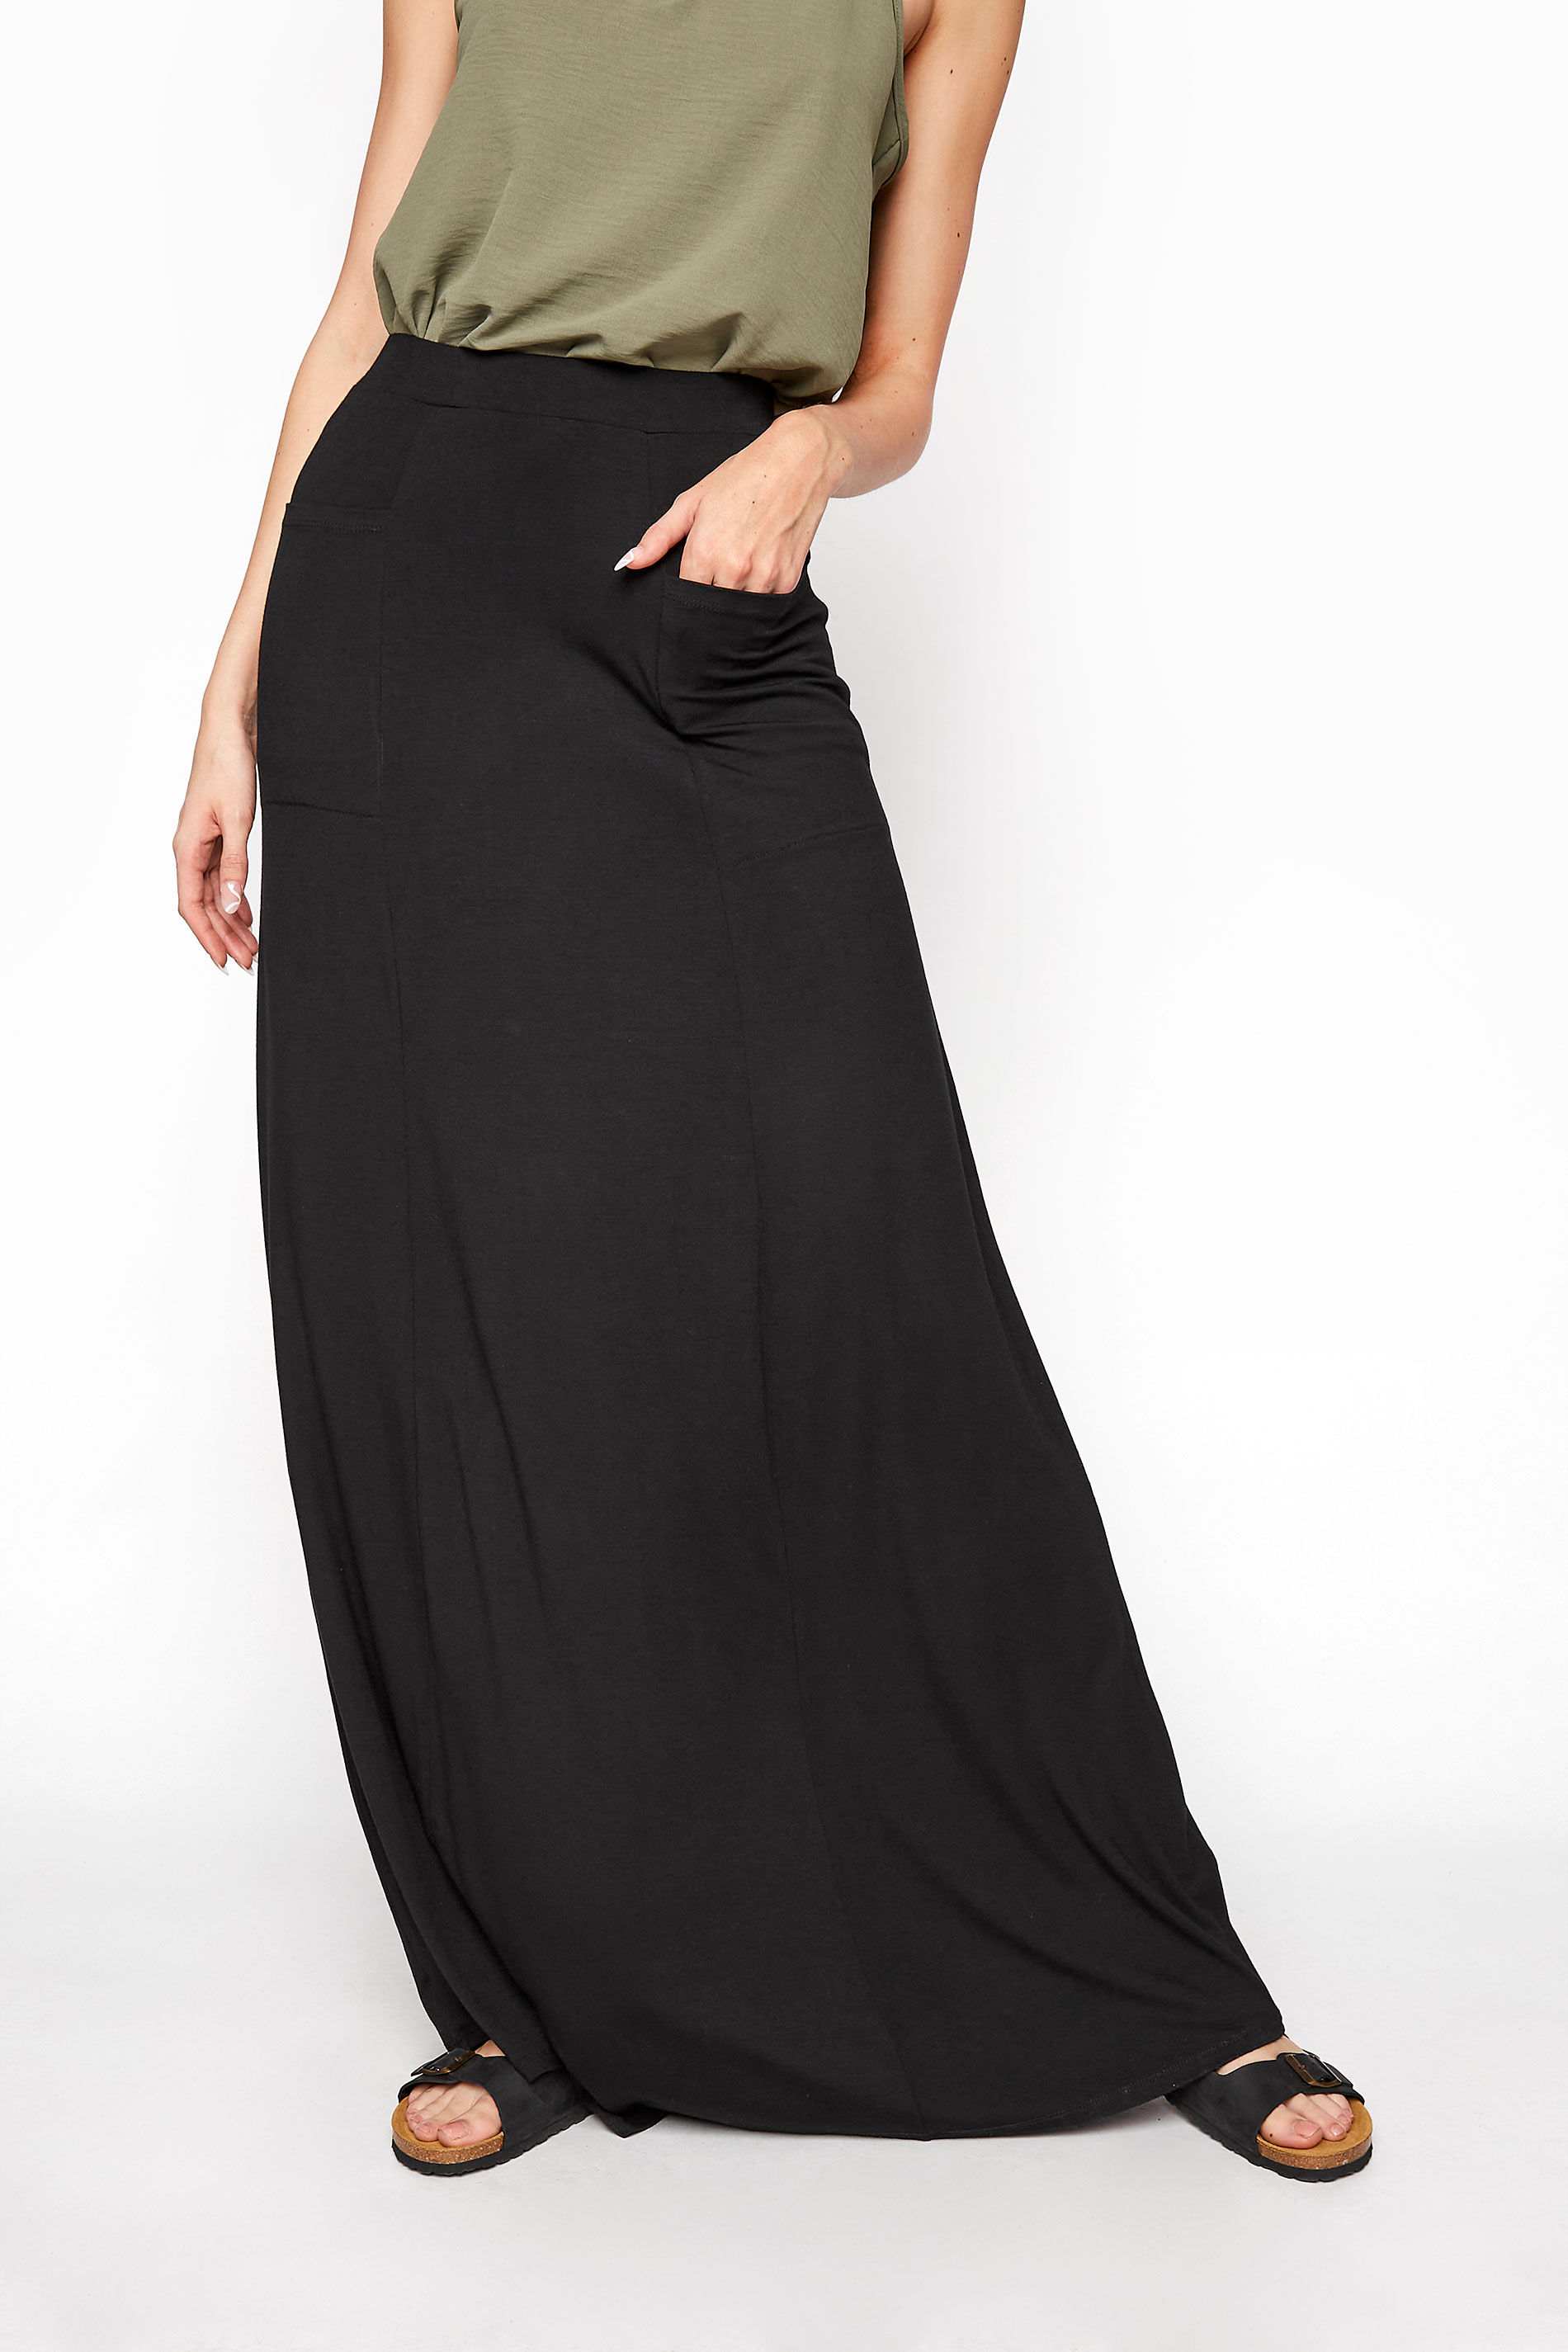 LTS Black Fit ☀ Flare Maxi Skirt | Long ...